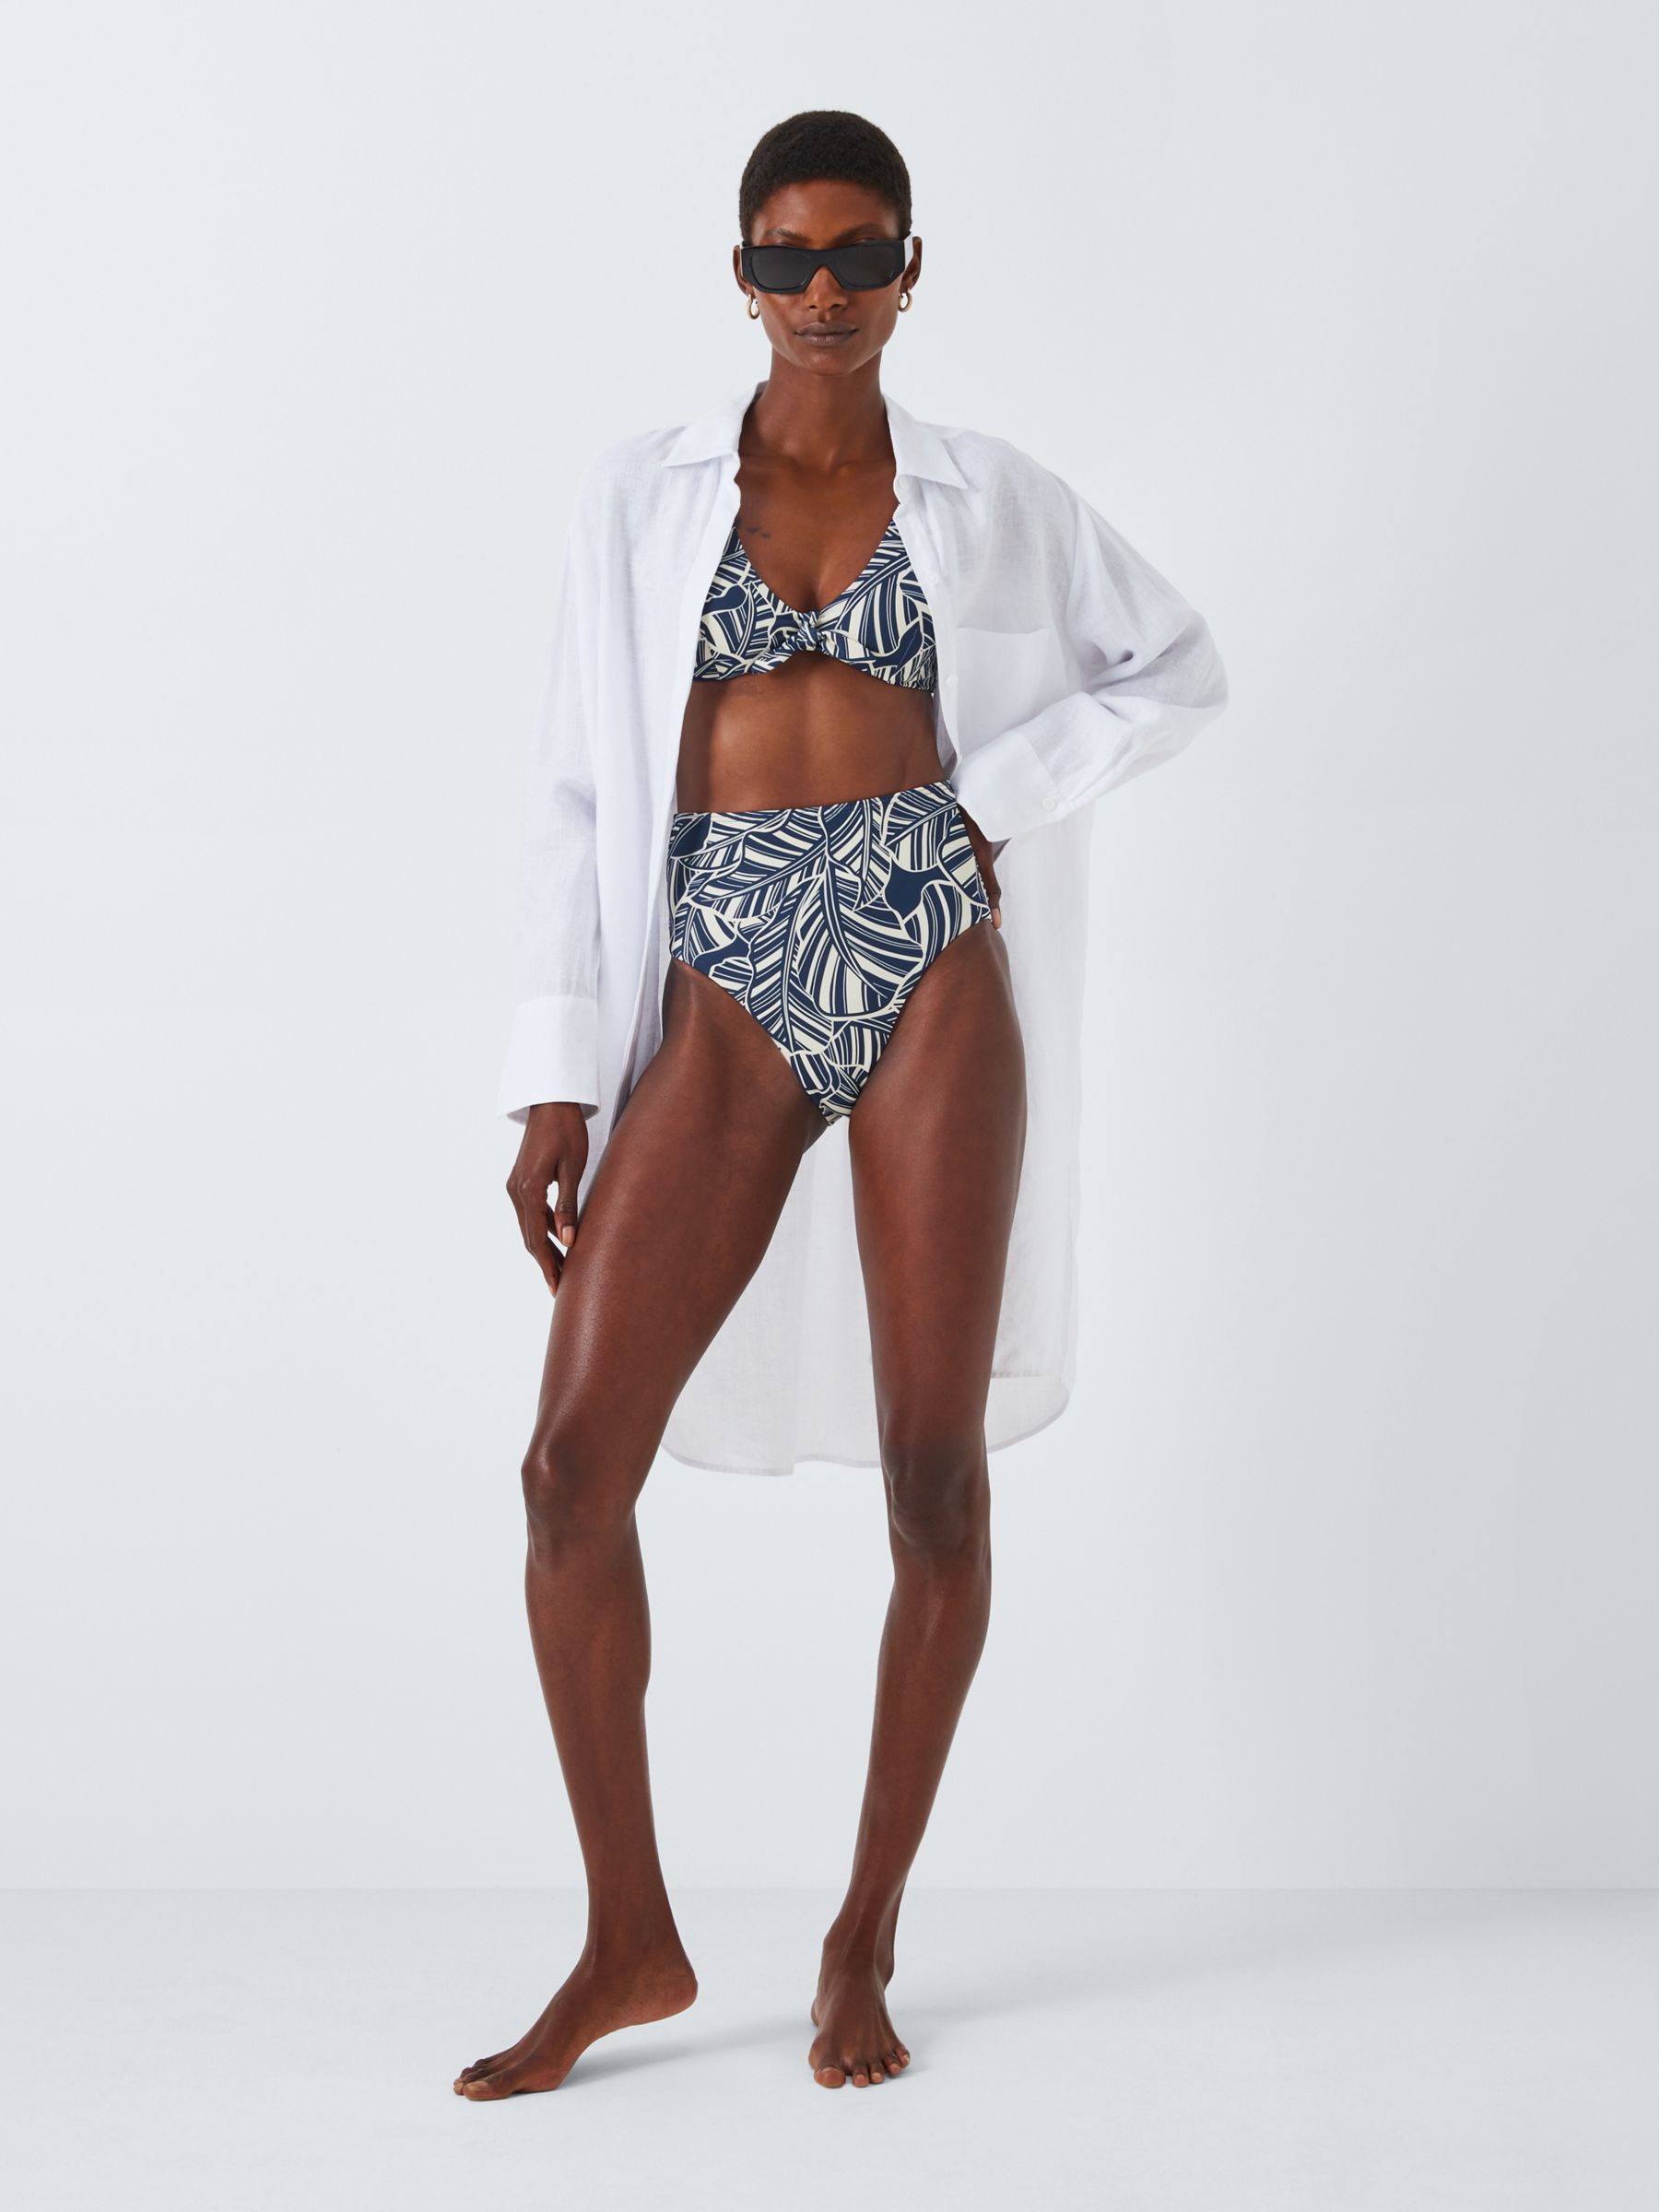 Buy John Lewis Bali Palm High Waist Bikini Bottoms. Navy Online at johnlewis.com